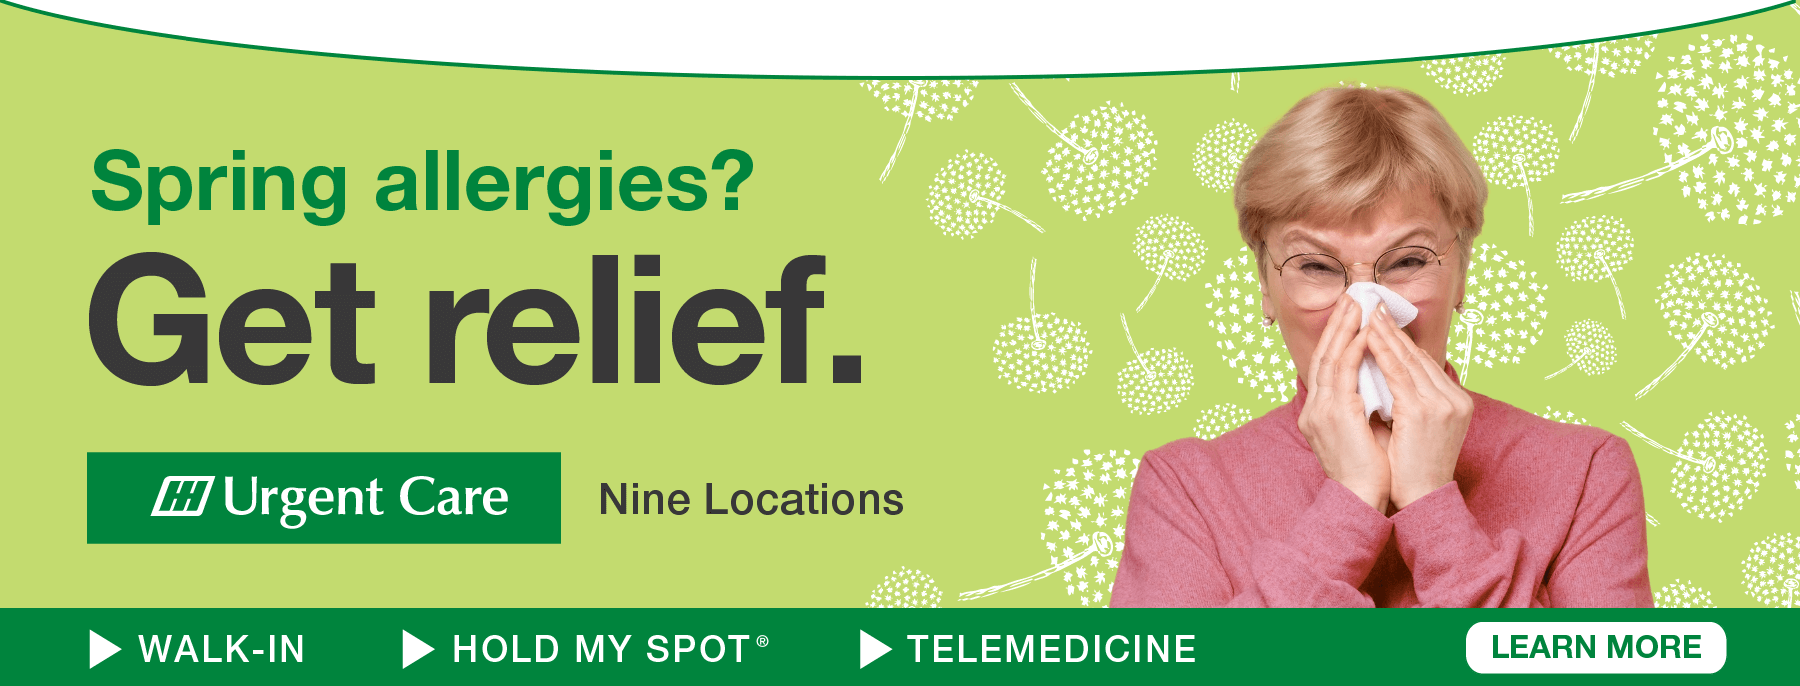 Spring allergies? Get relief! HH Urgent Care